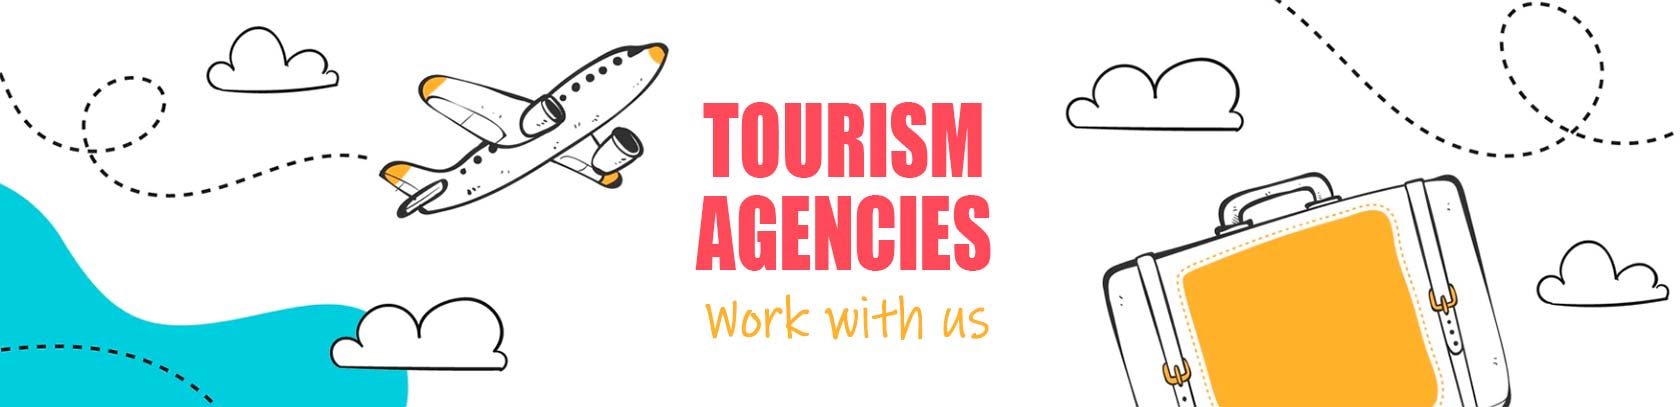 Tourism Agencies